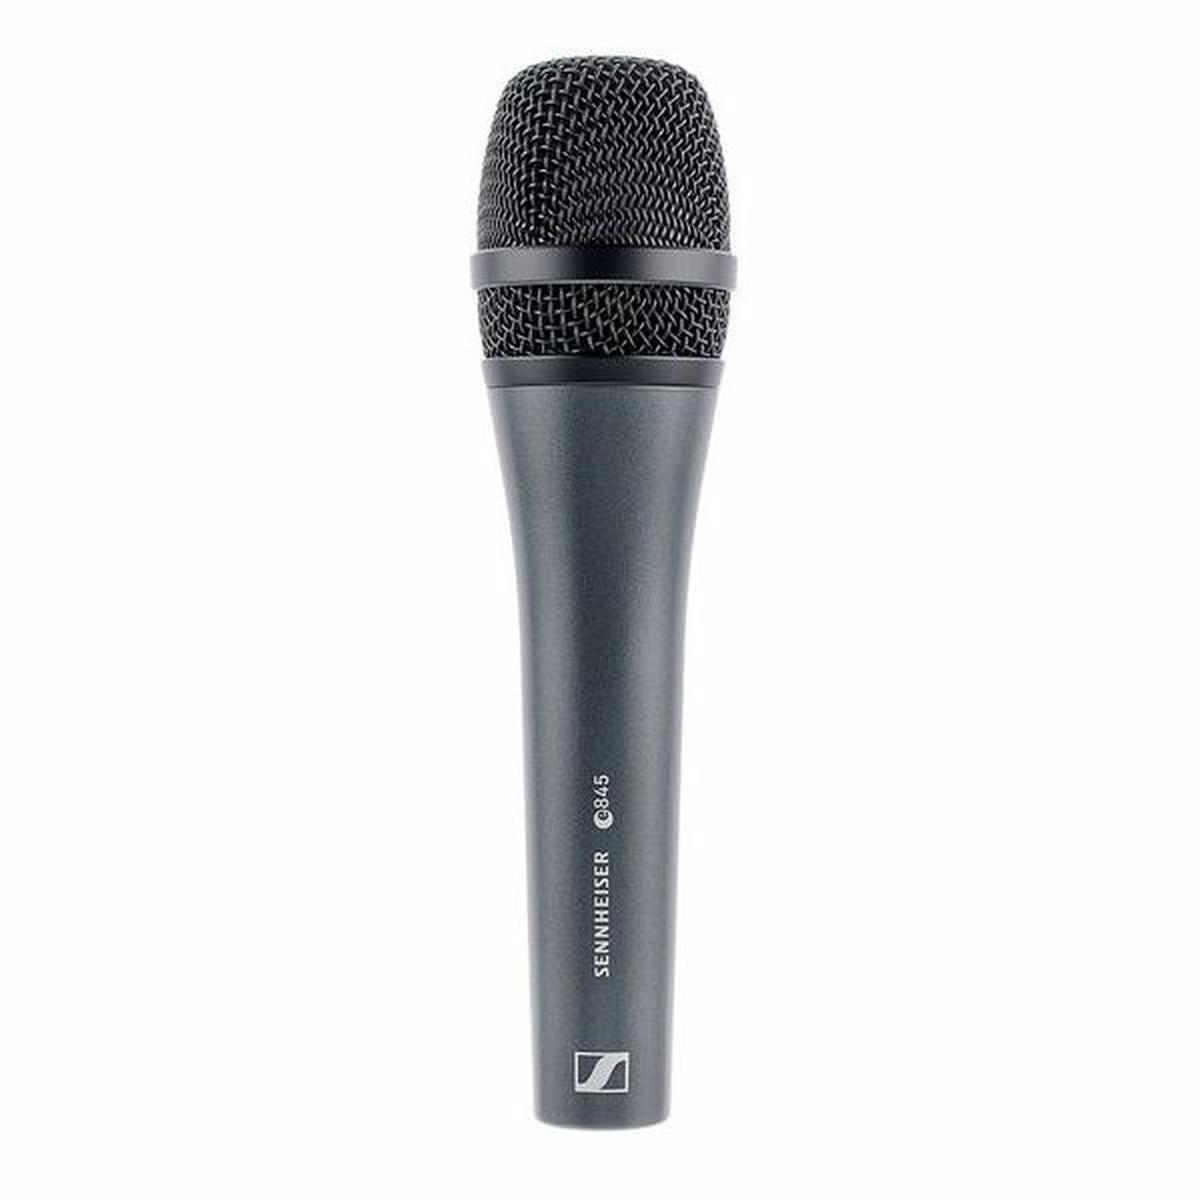 Sennheiser e845 microfono dinamico per voce